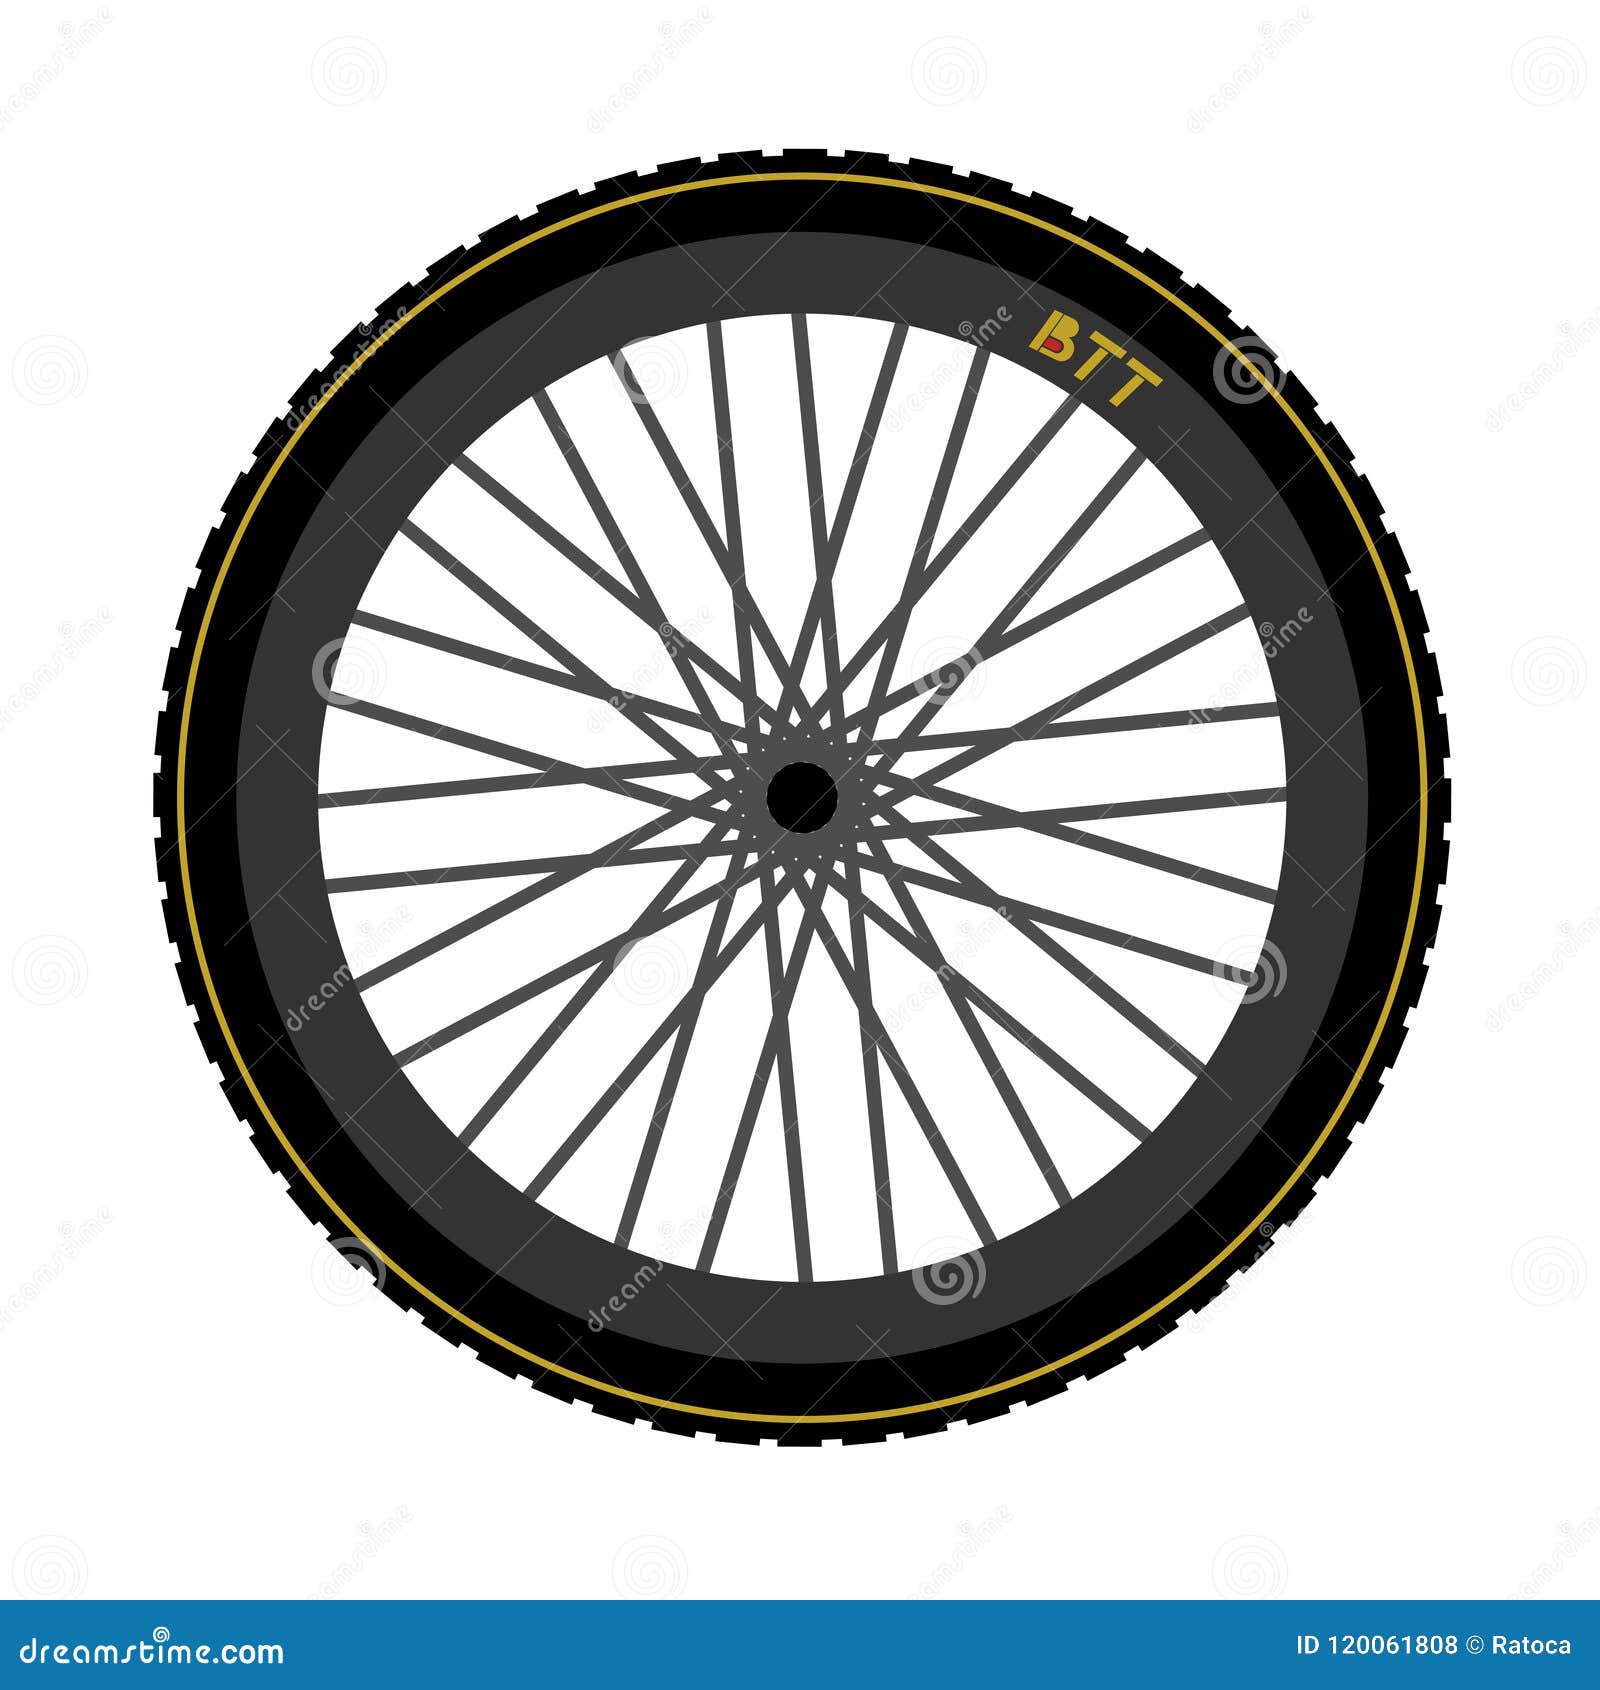 btt bike wheel 